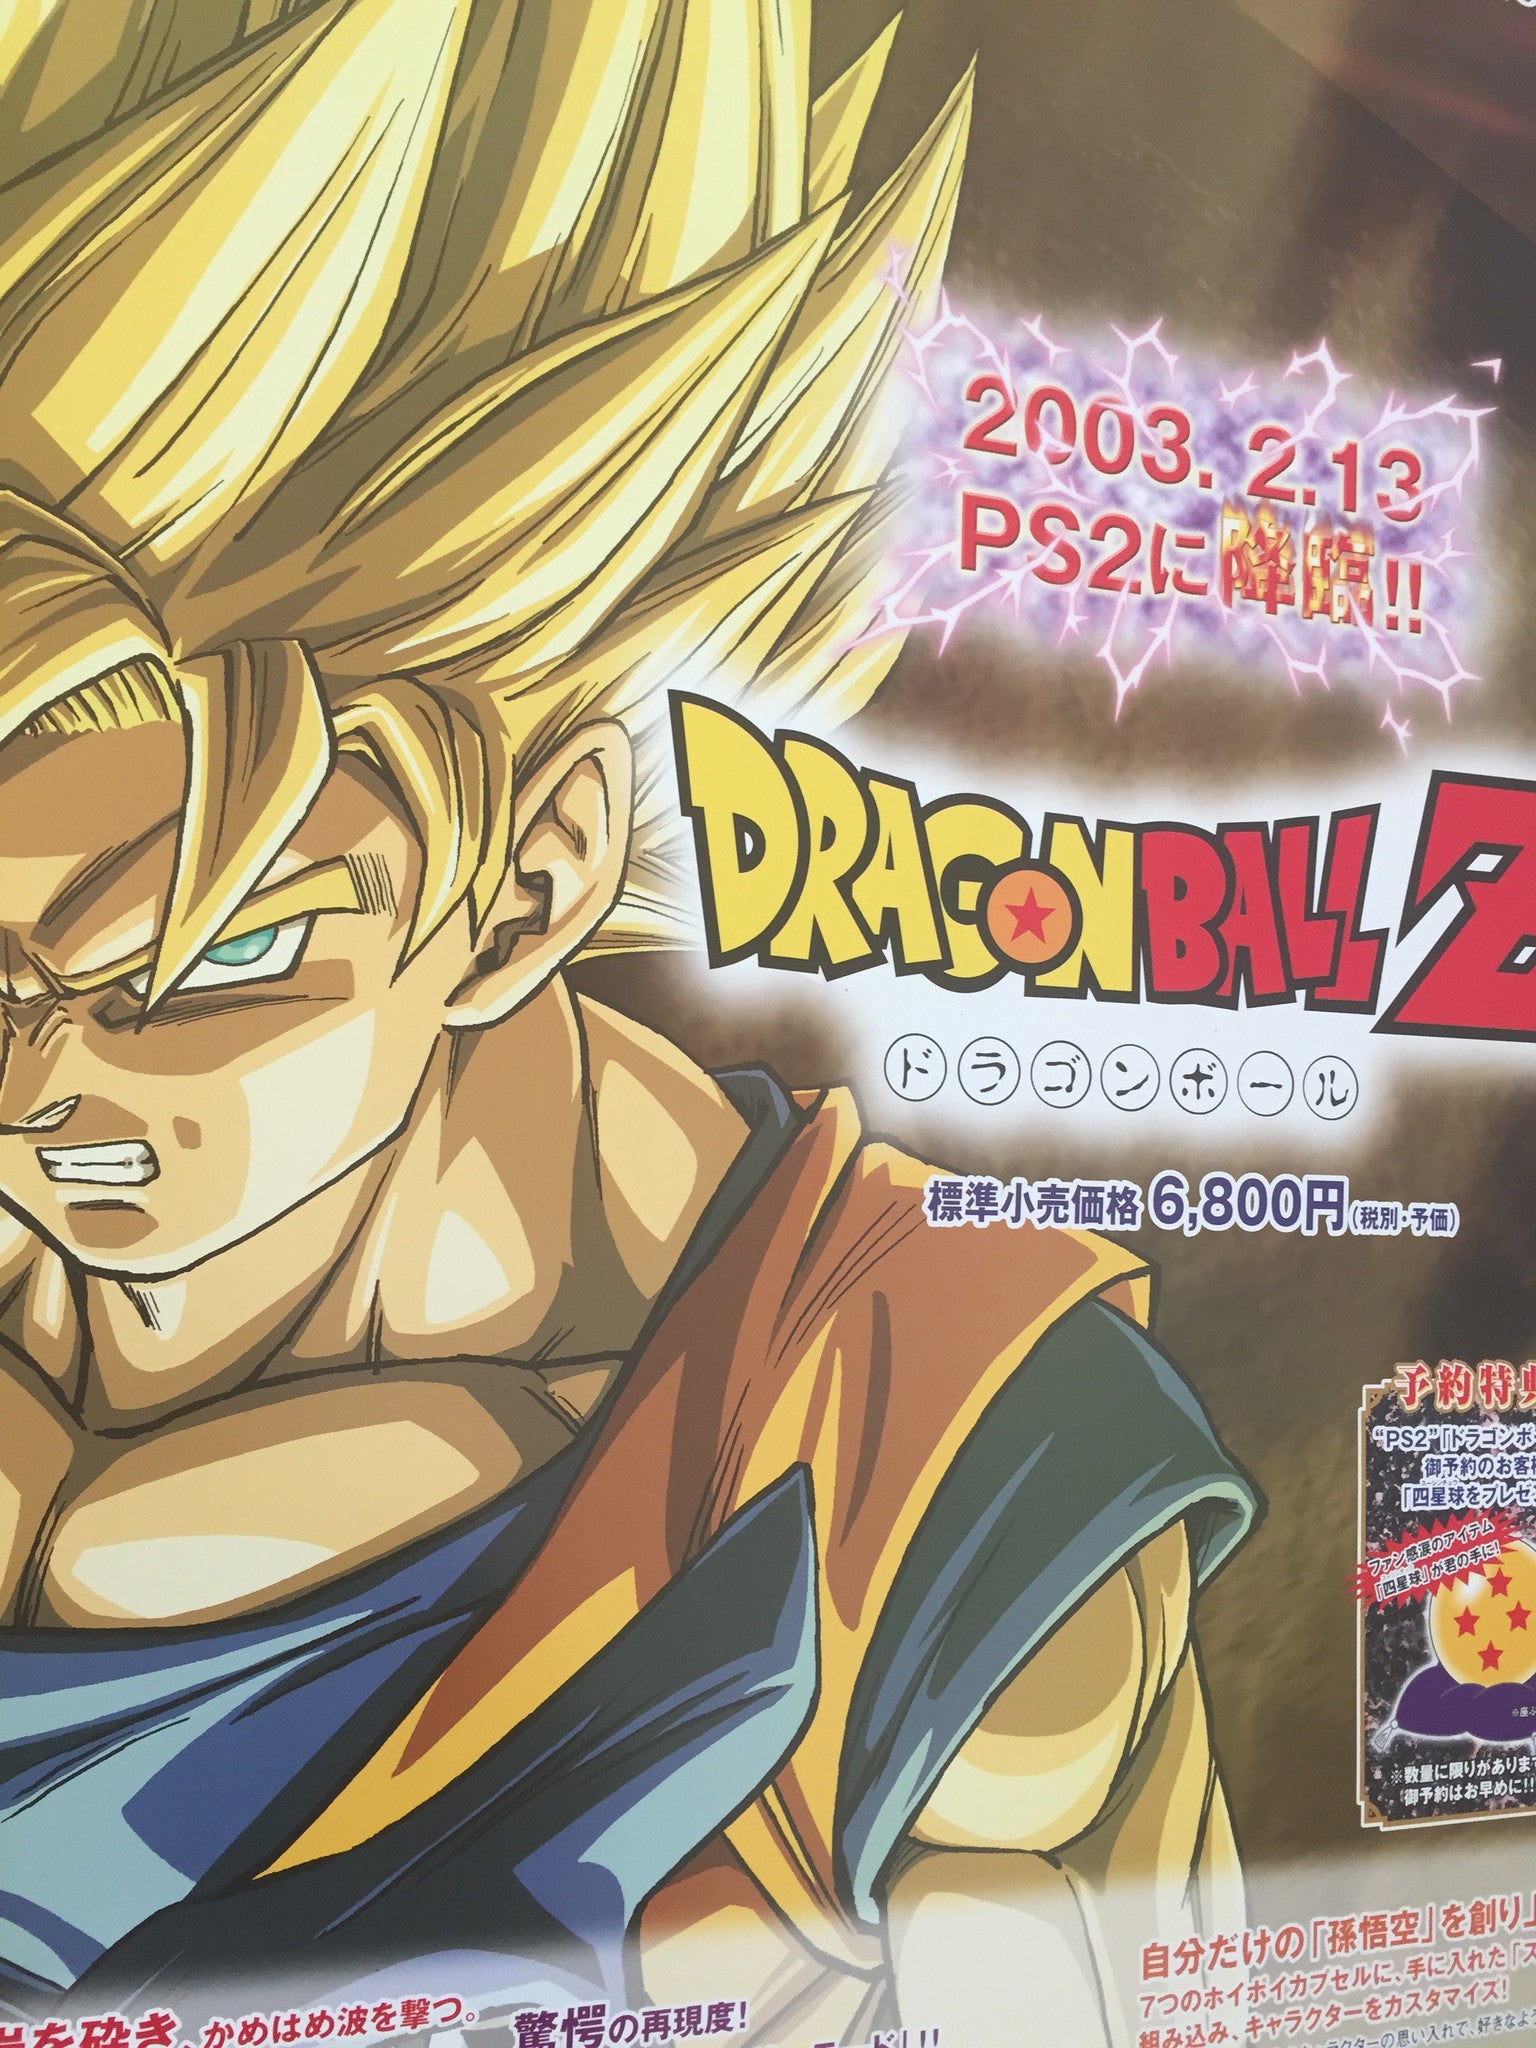 Dragonball Z: Budokai (B2) Japanese Promotional Poster #1